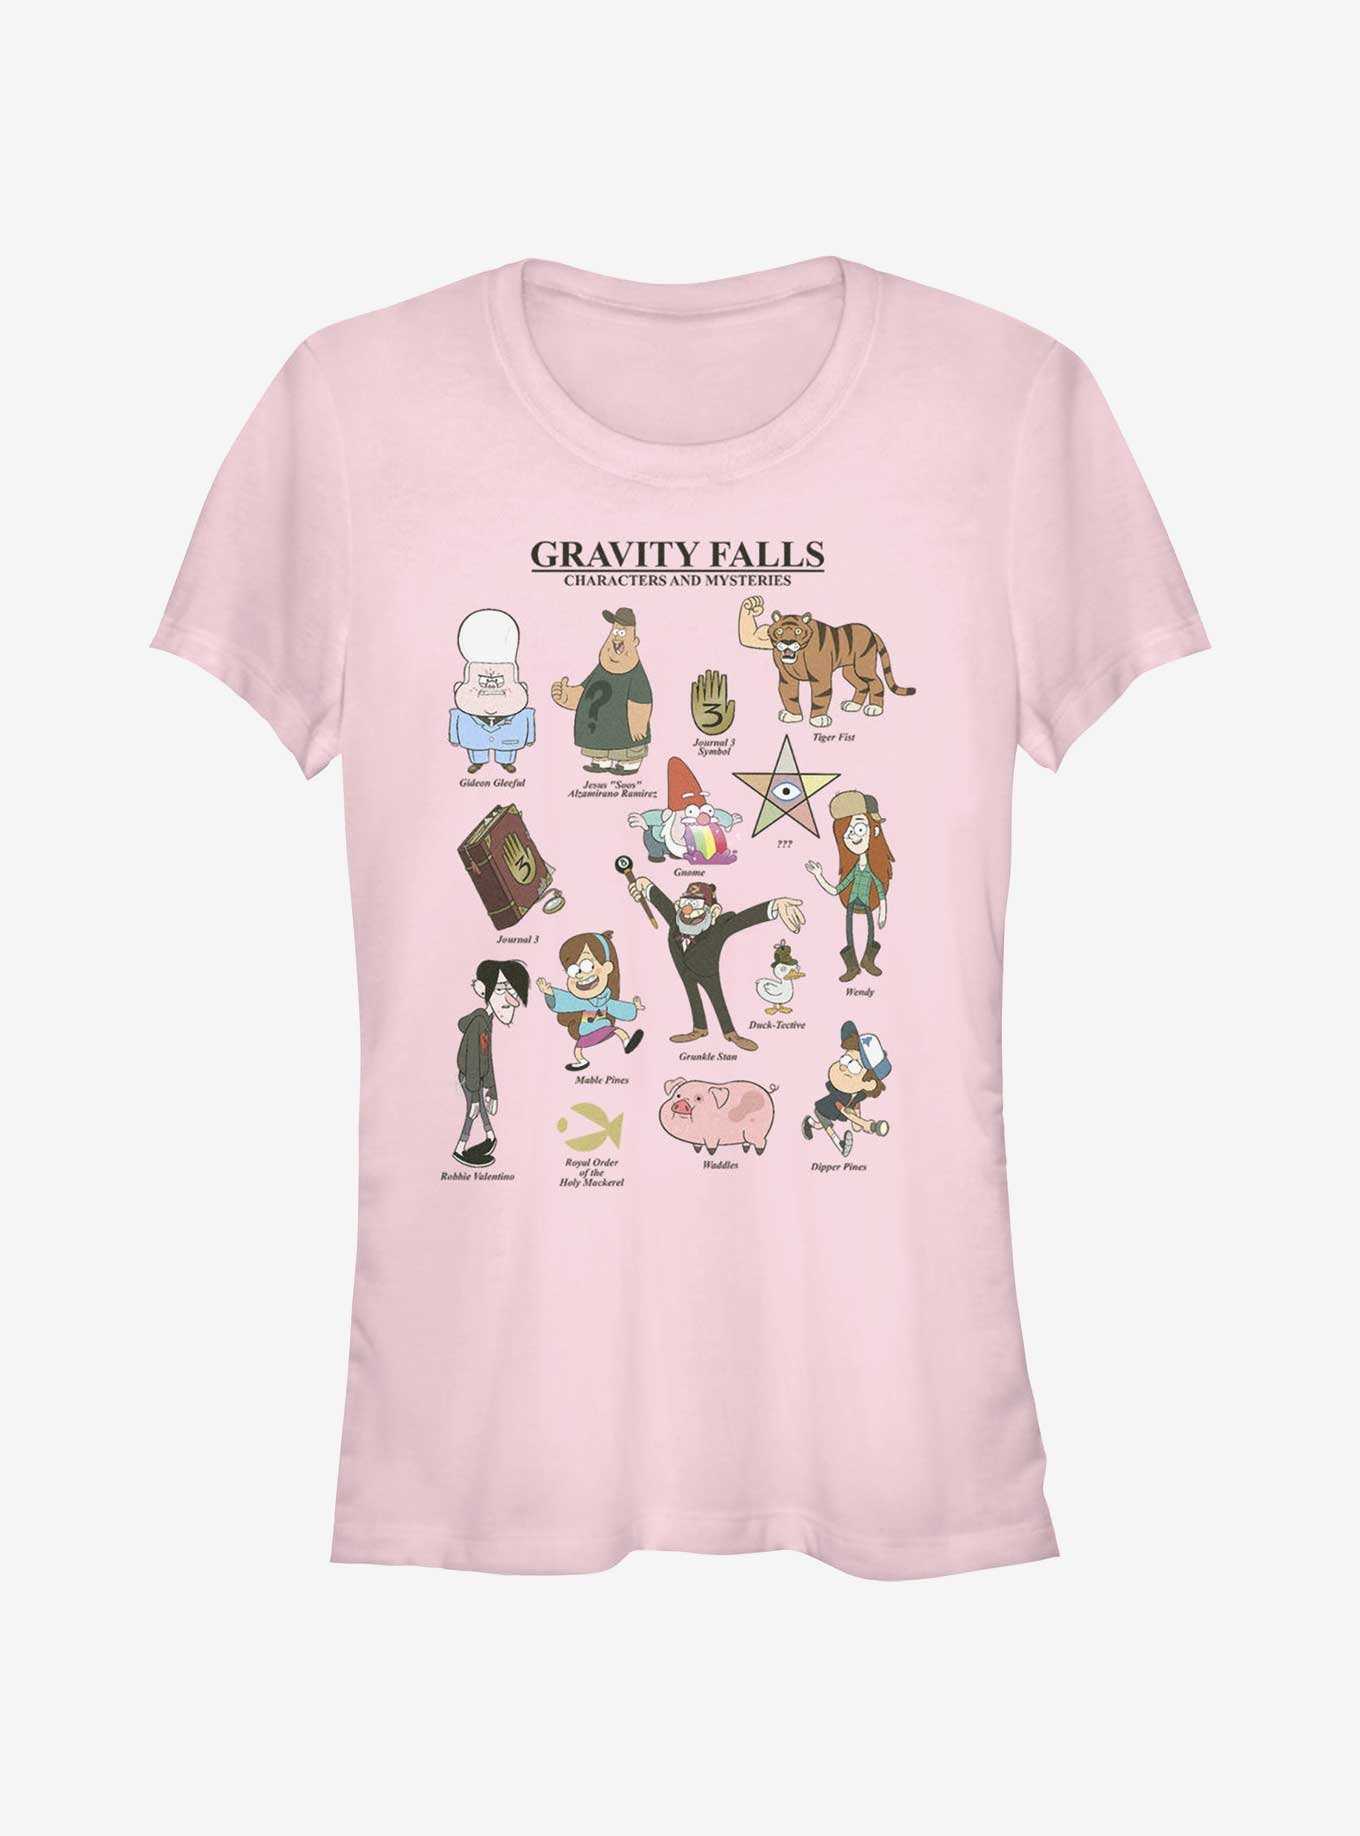 Disney Gravity Falls Characters & Mysteries Girls T-Shirt, , hi-res